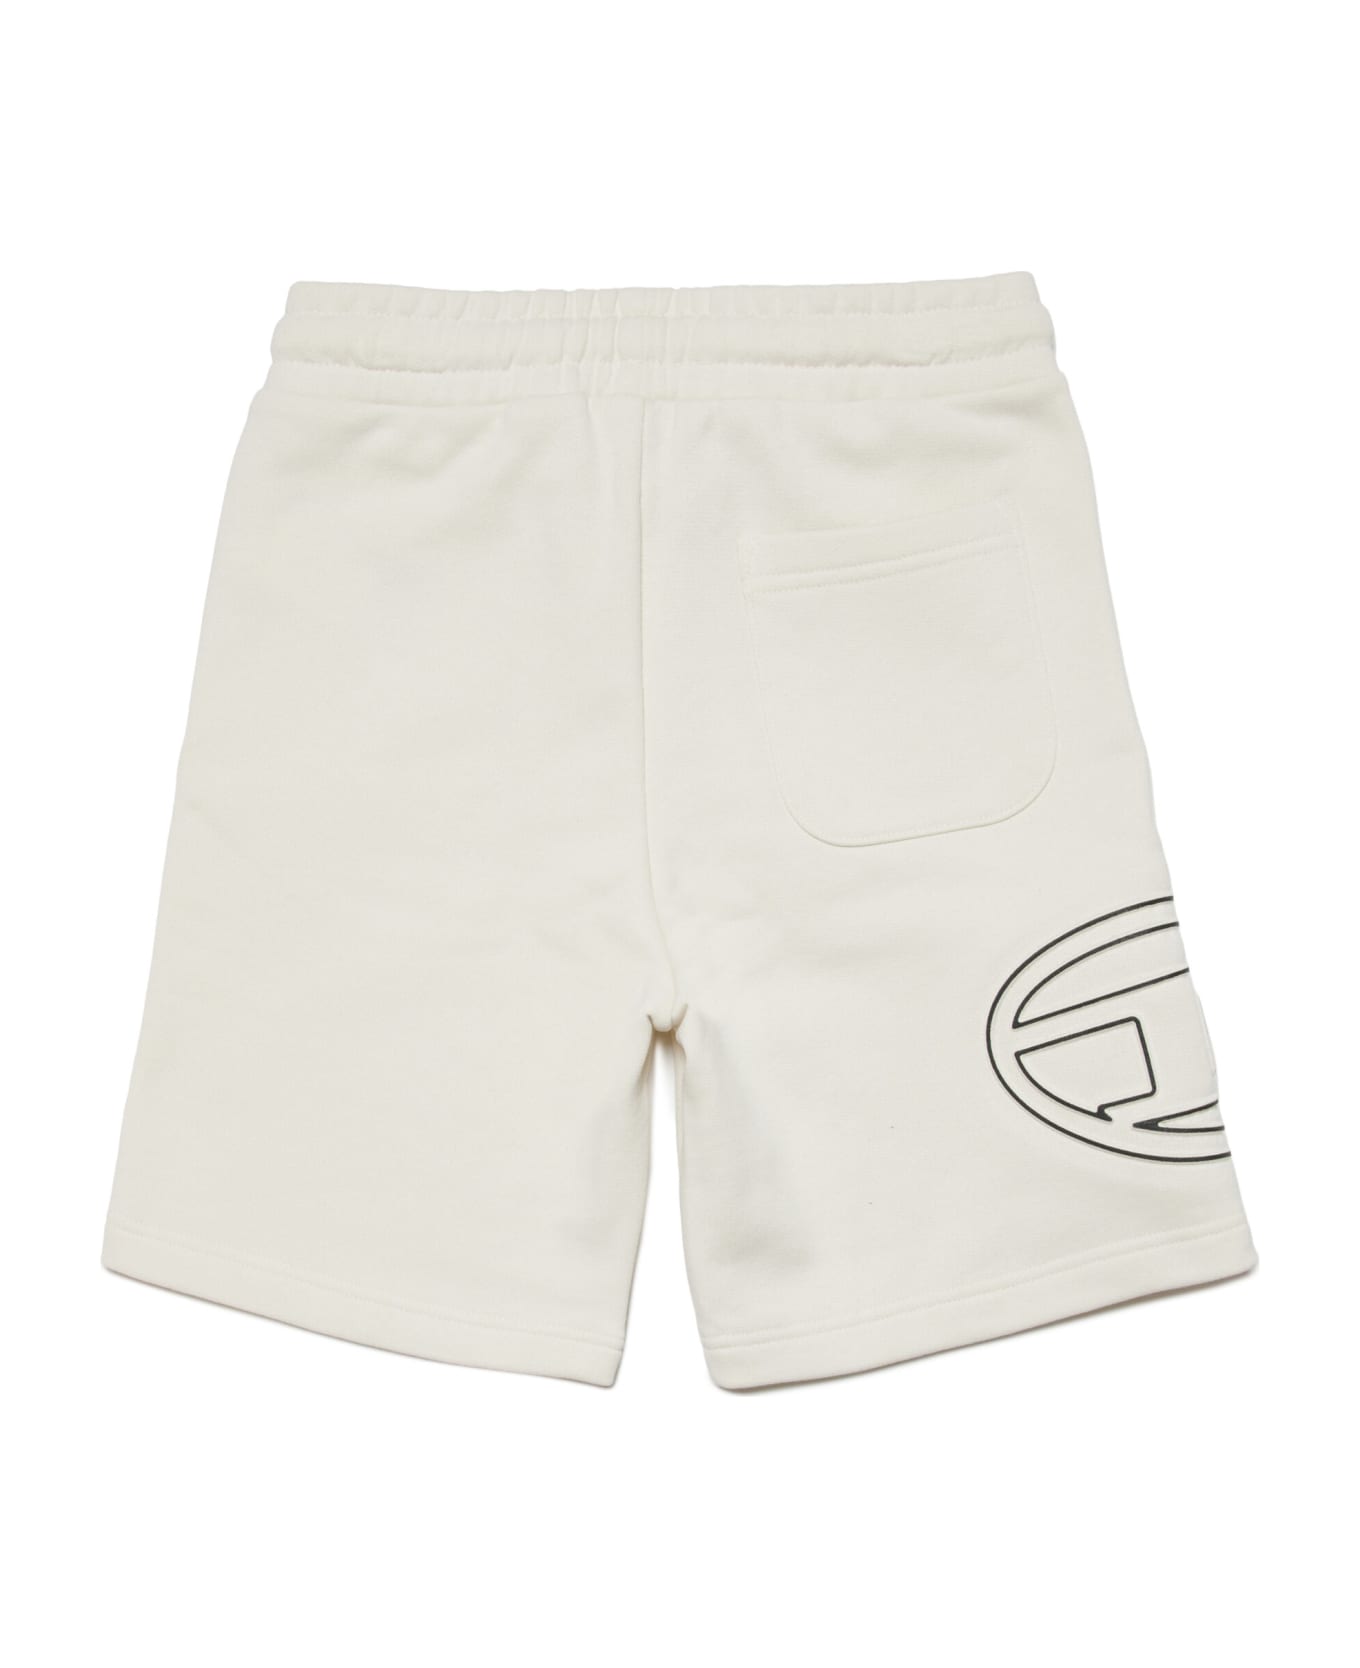 Diesel Pcurvbigoval Shorts Diesel Fleece Shorts With Oval D Logo